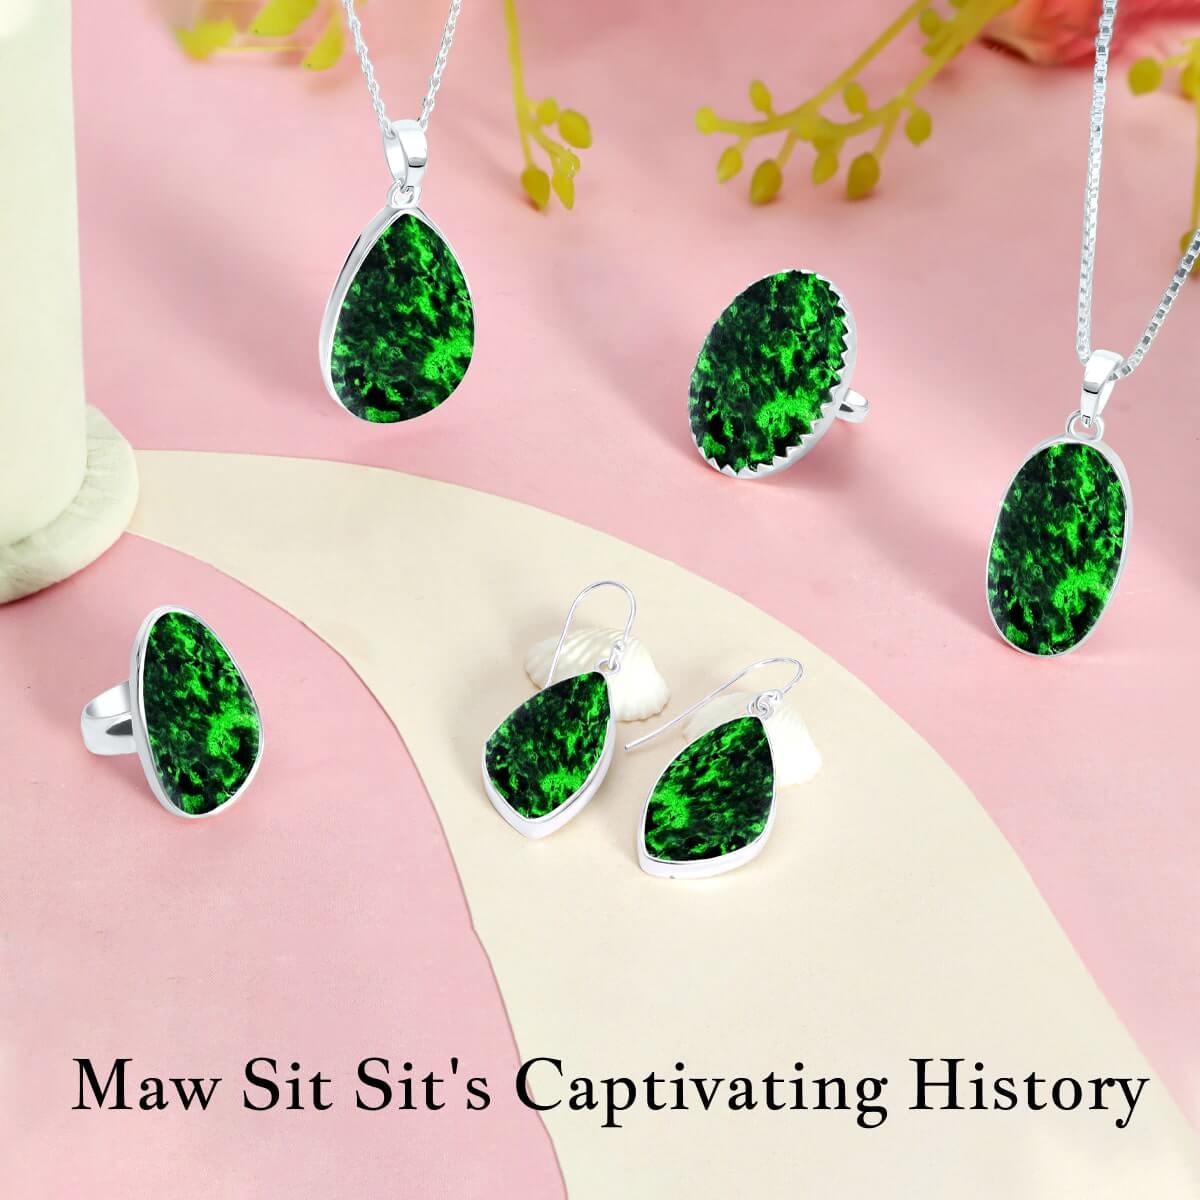 Maw Sit Sit Jewelry History